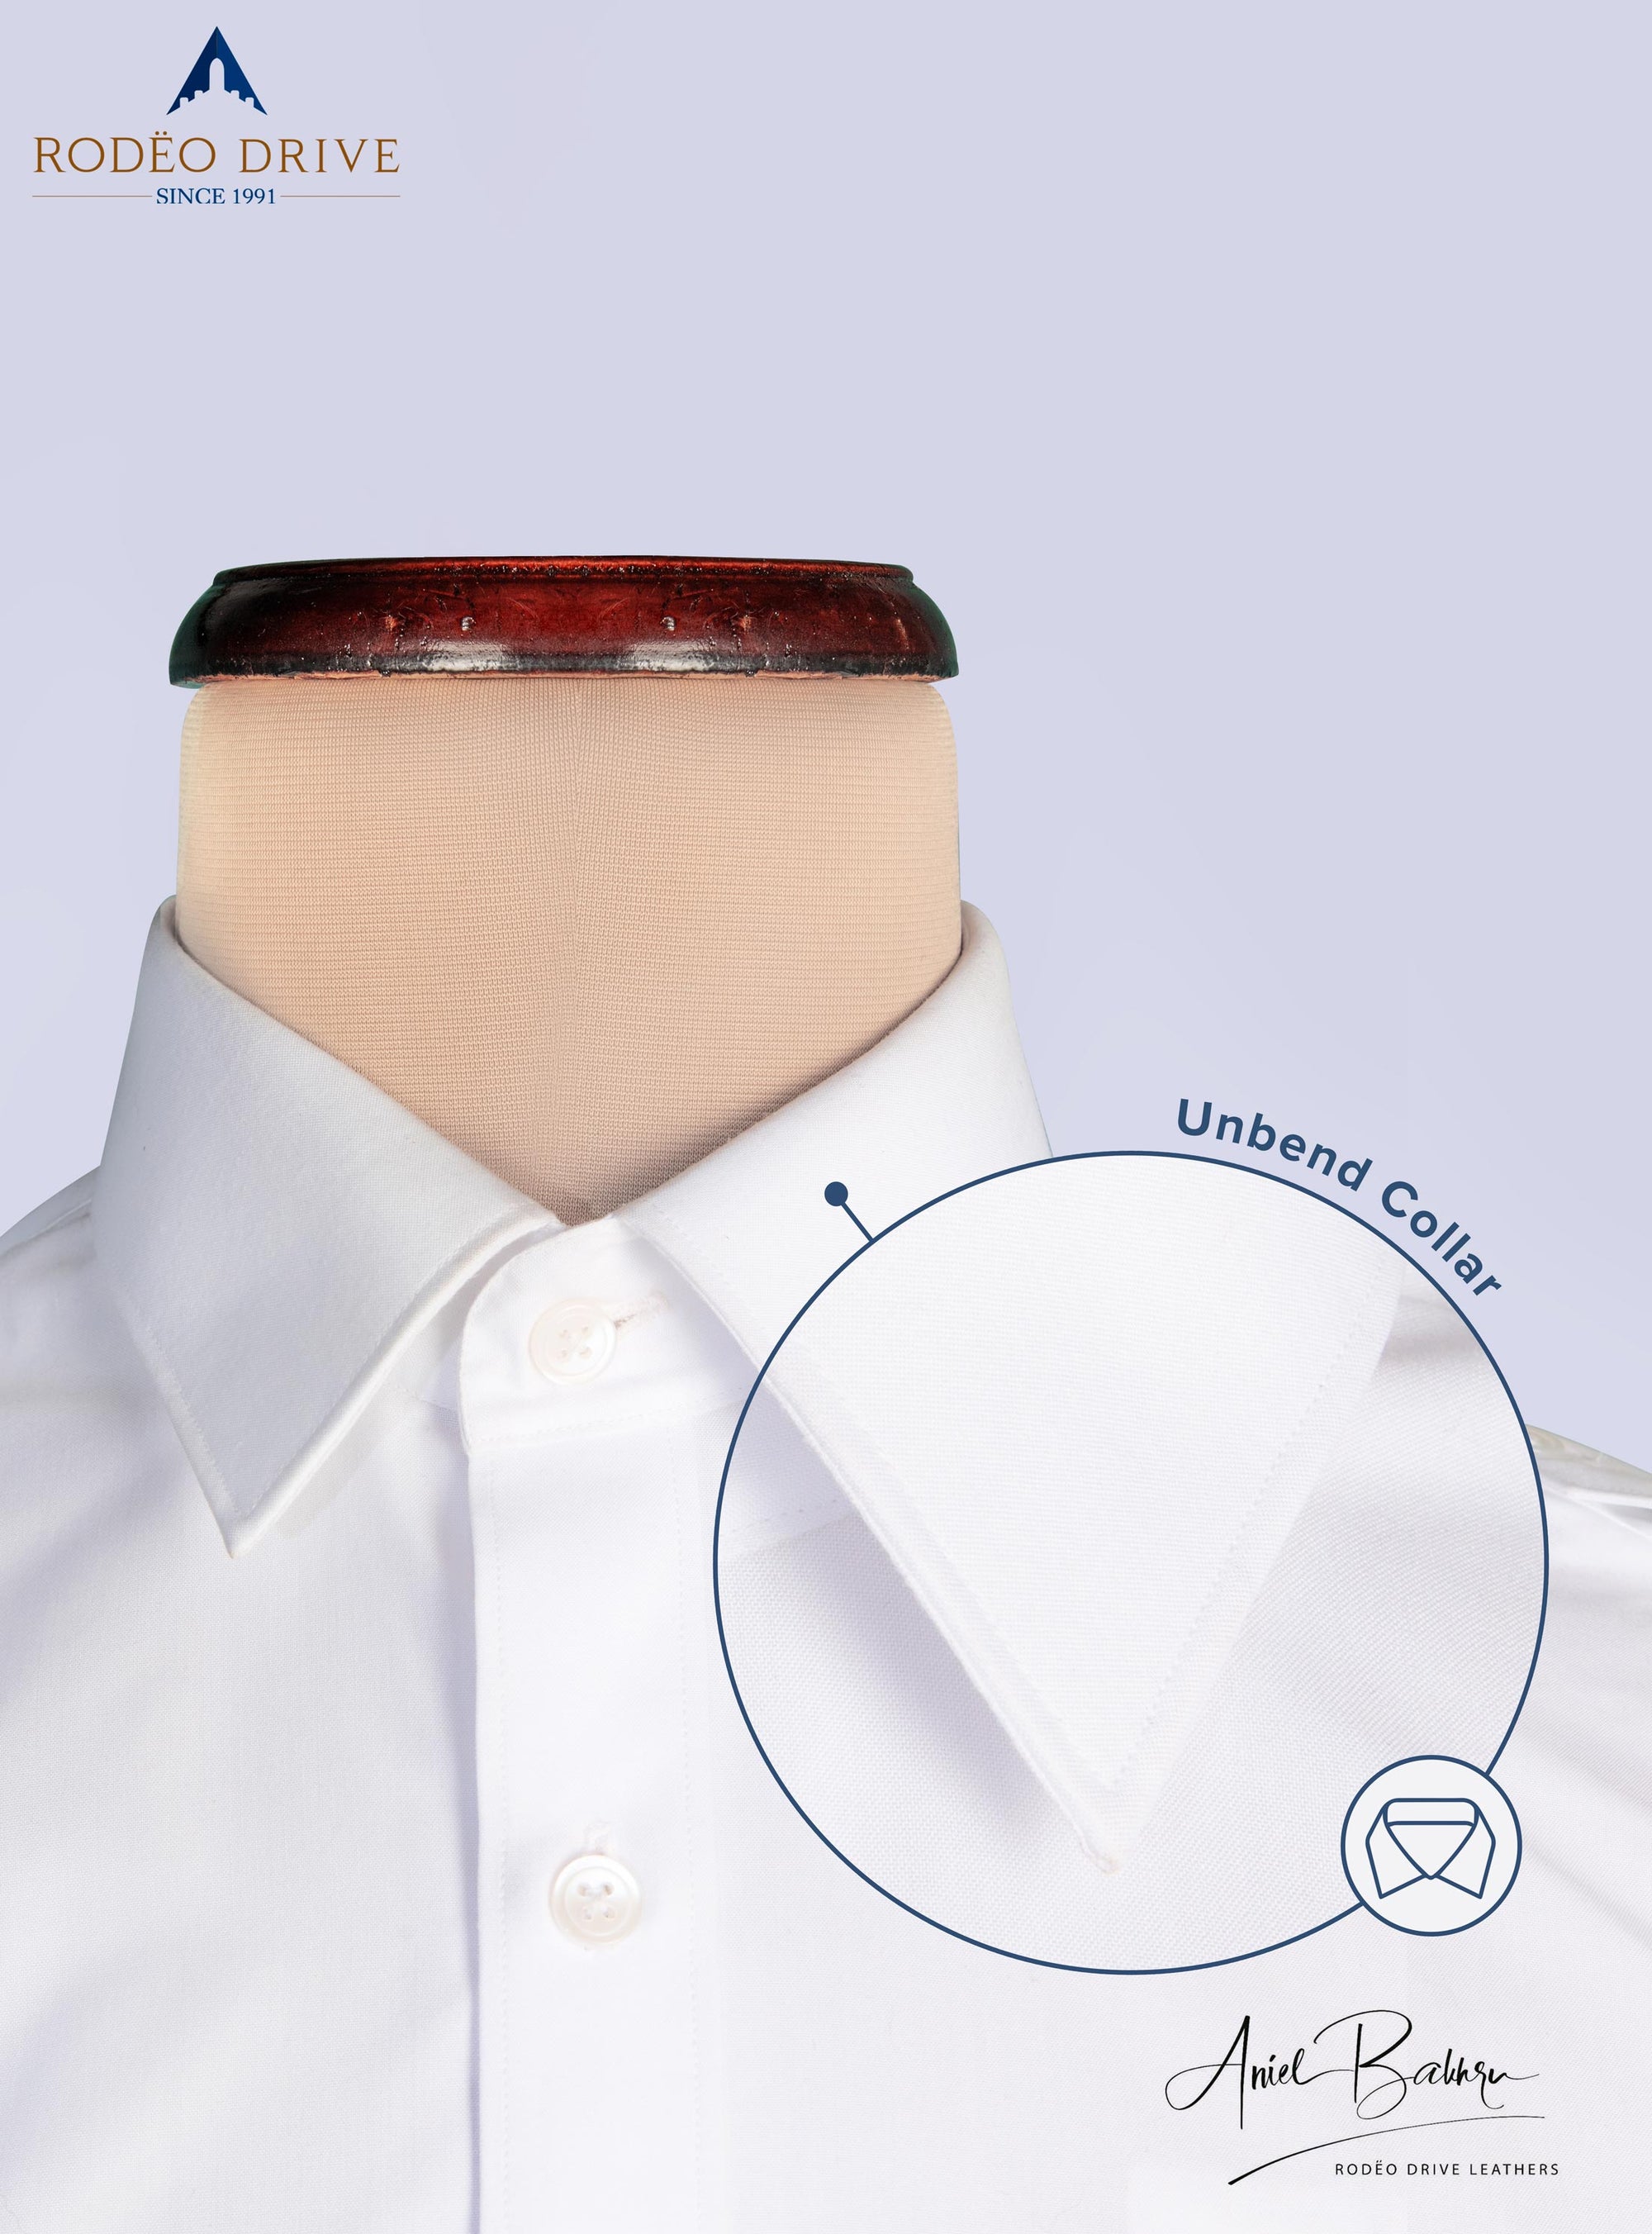 Stylish unbend collar image of Custom Women's Pilot shirt